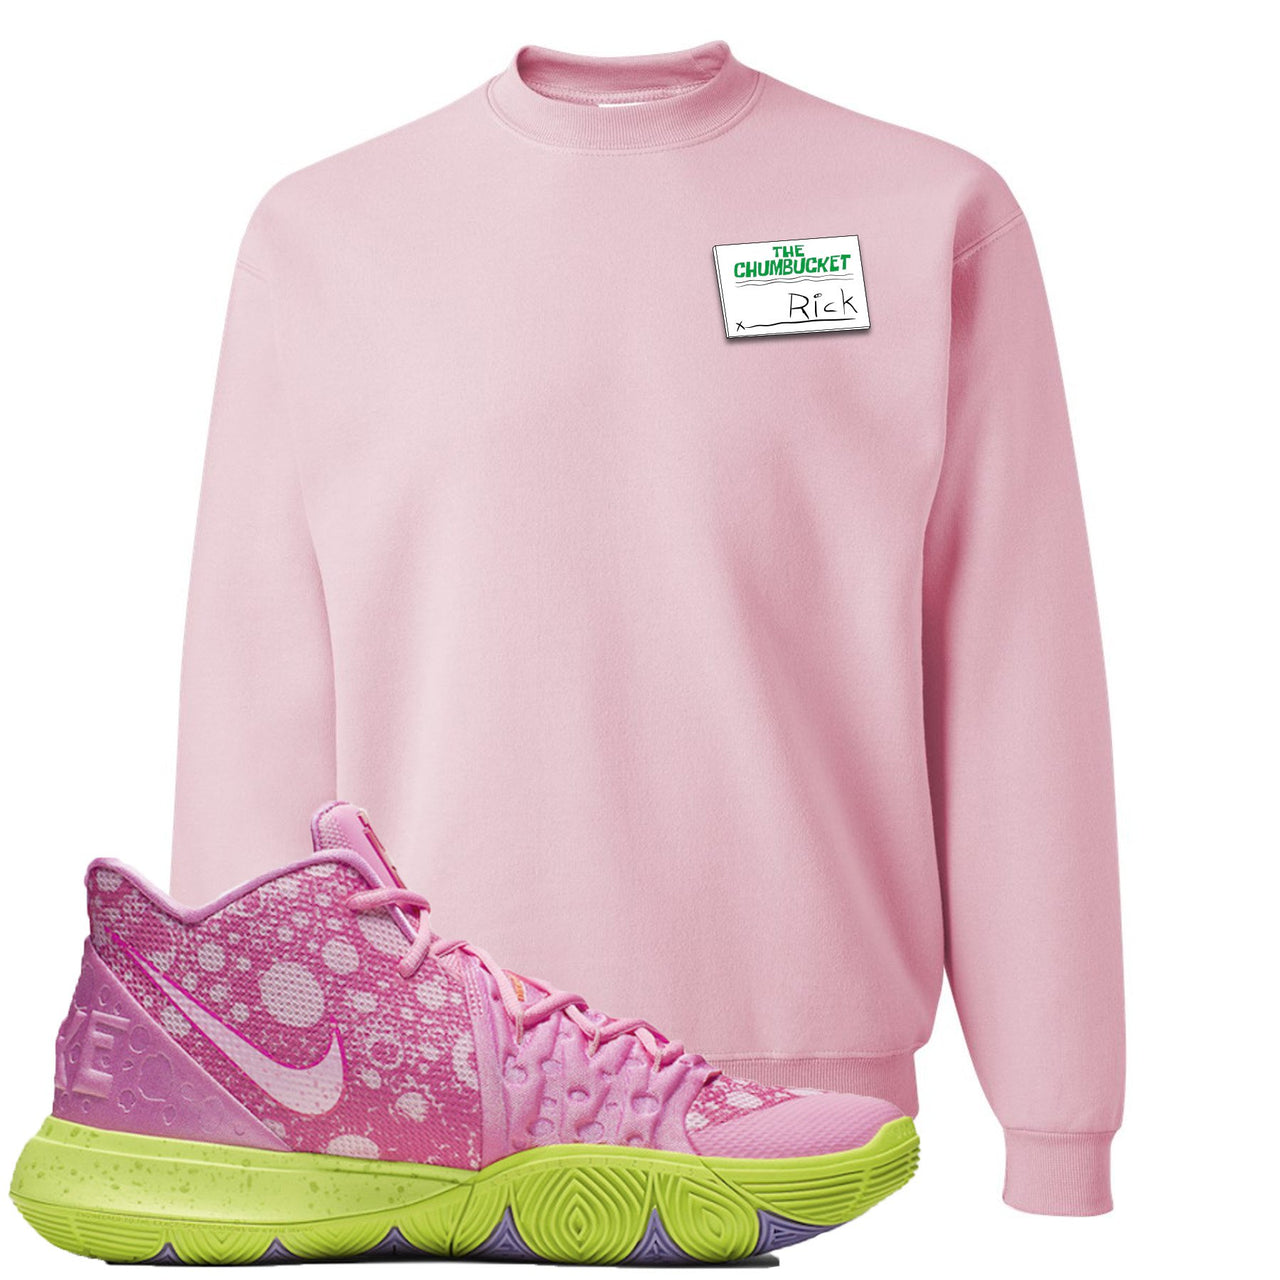 Patrick K5s Sweater | Rick, Light Pink